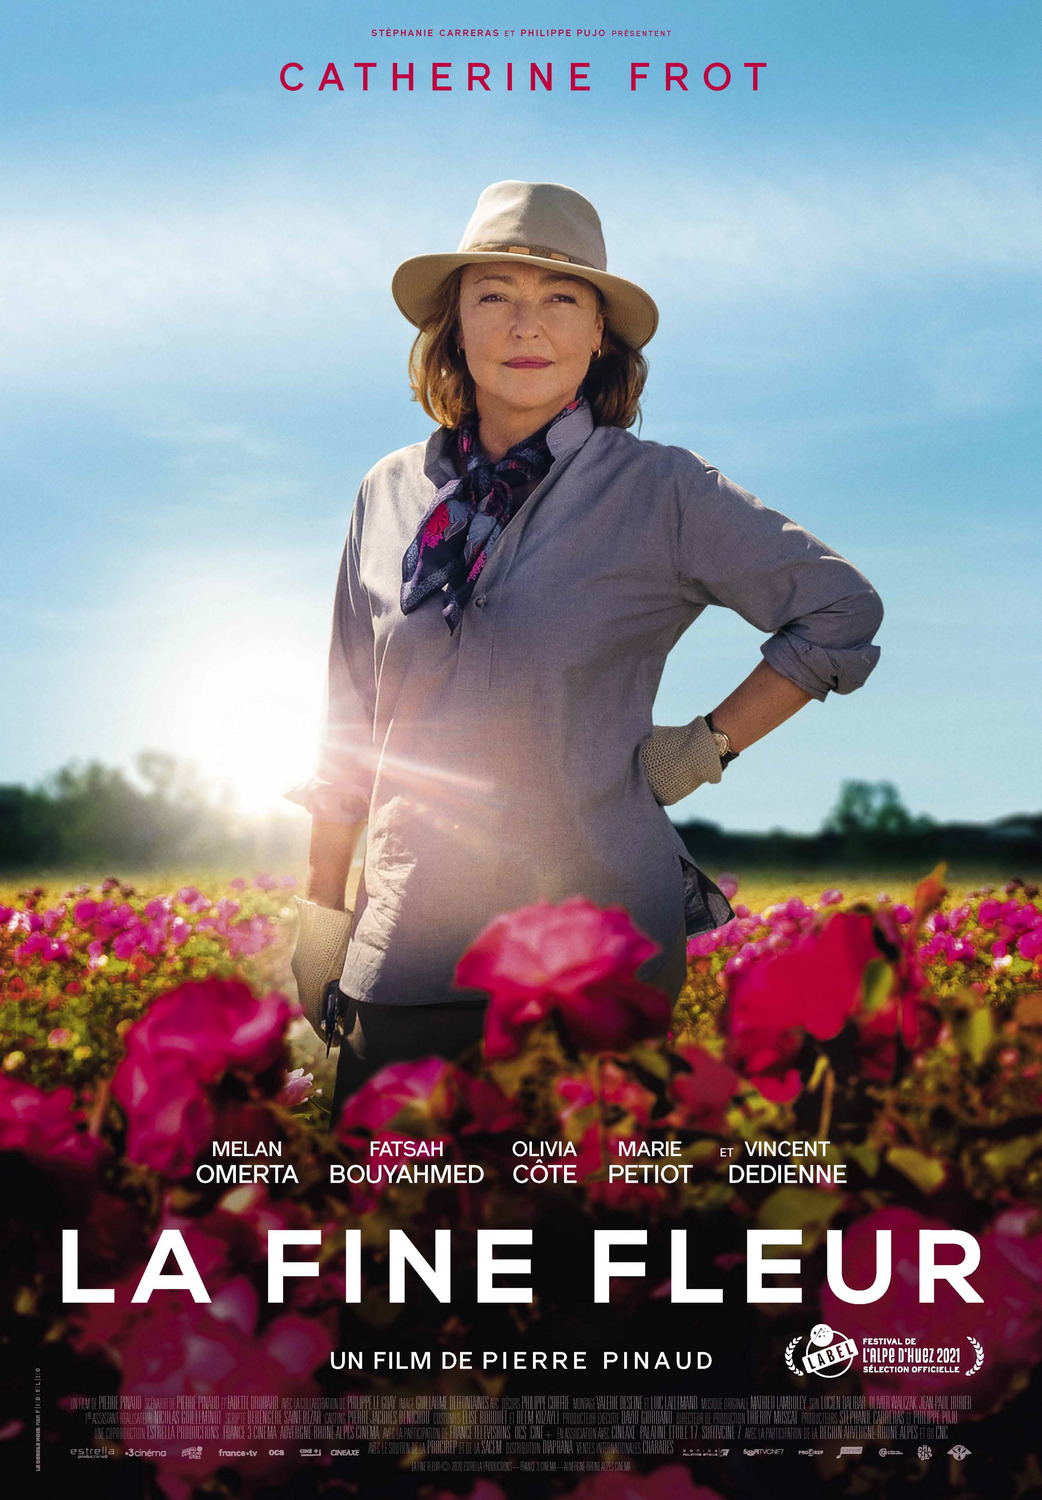 La fine fleur (#1 of 2): Extra Large Movie Poster Image - IMP Awards